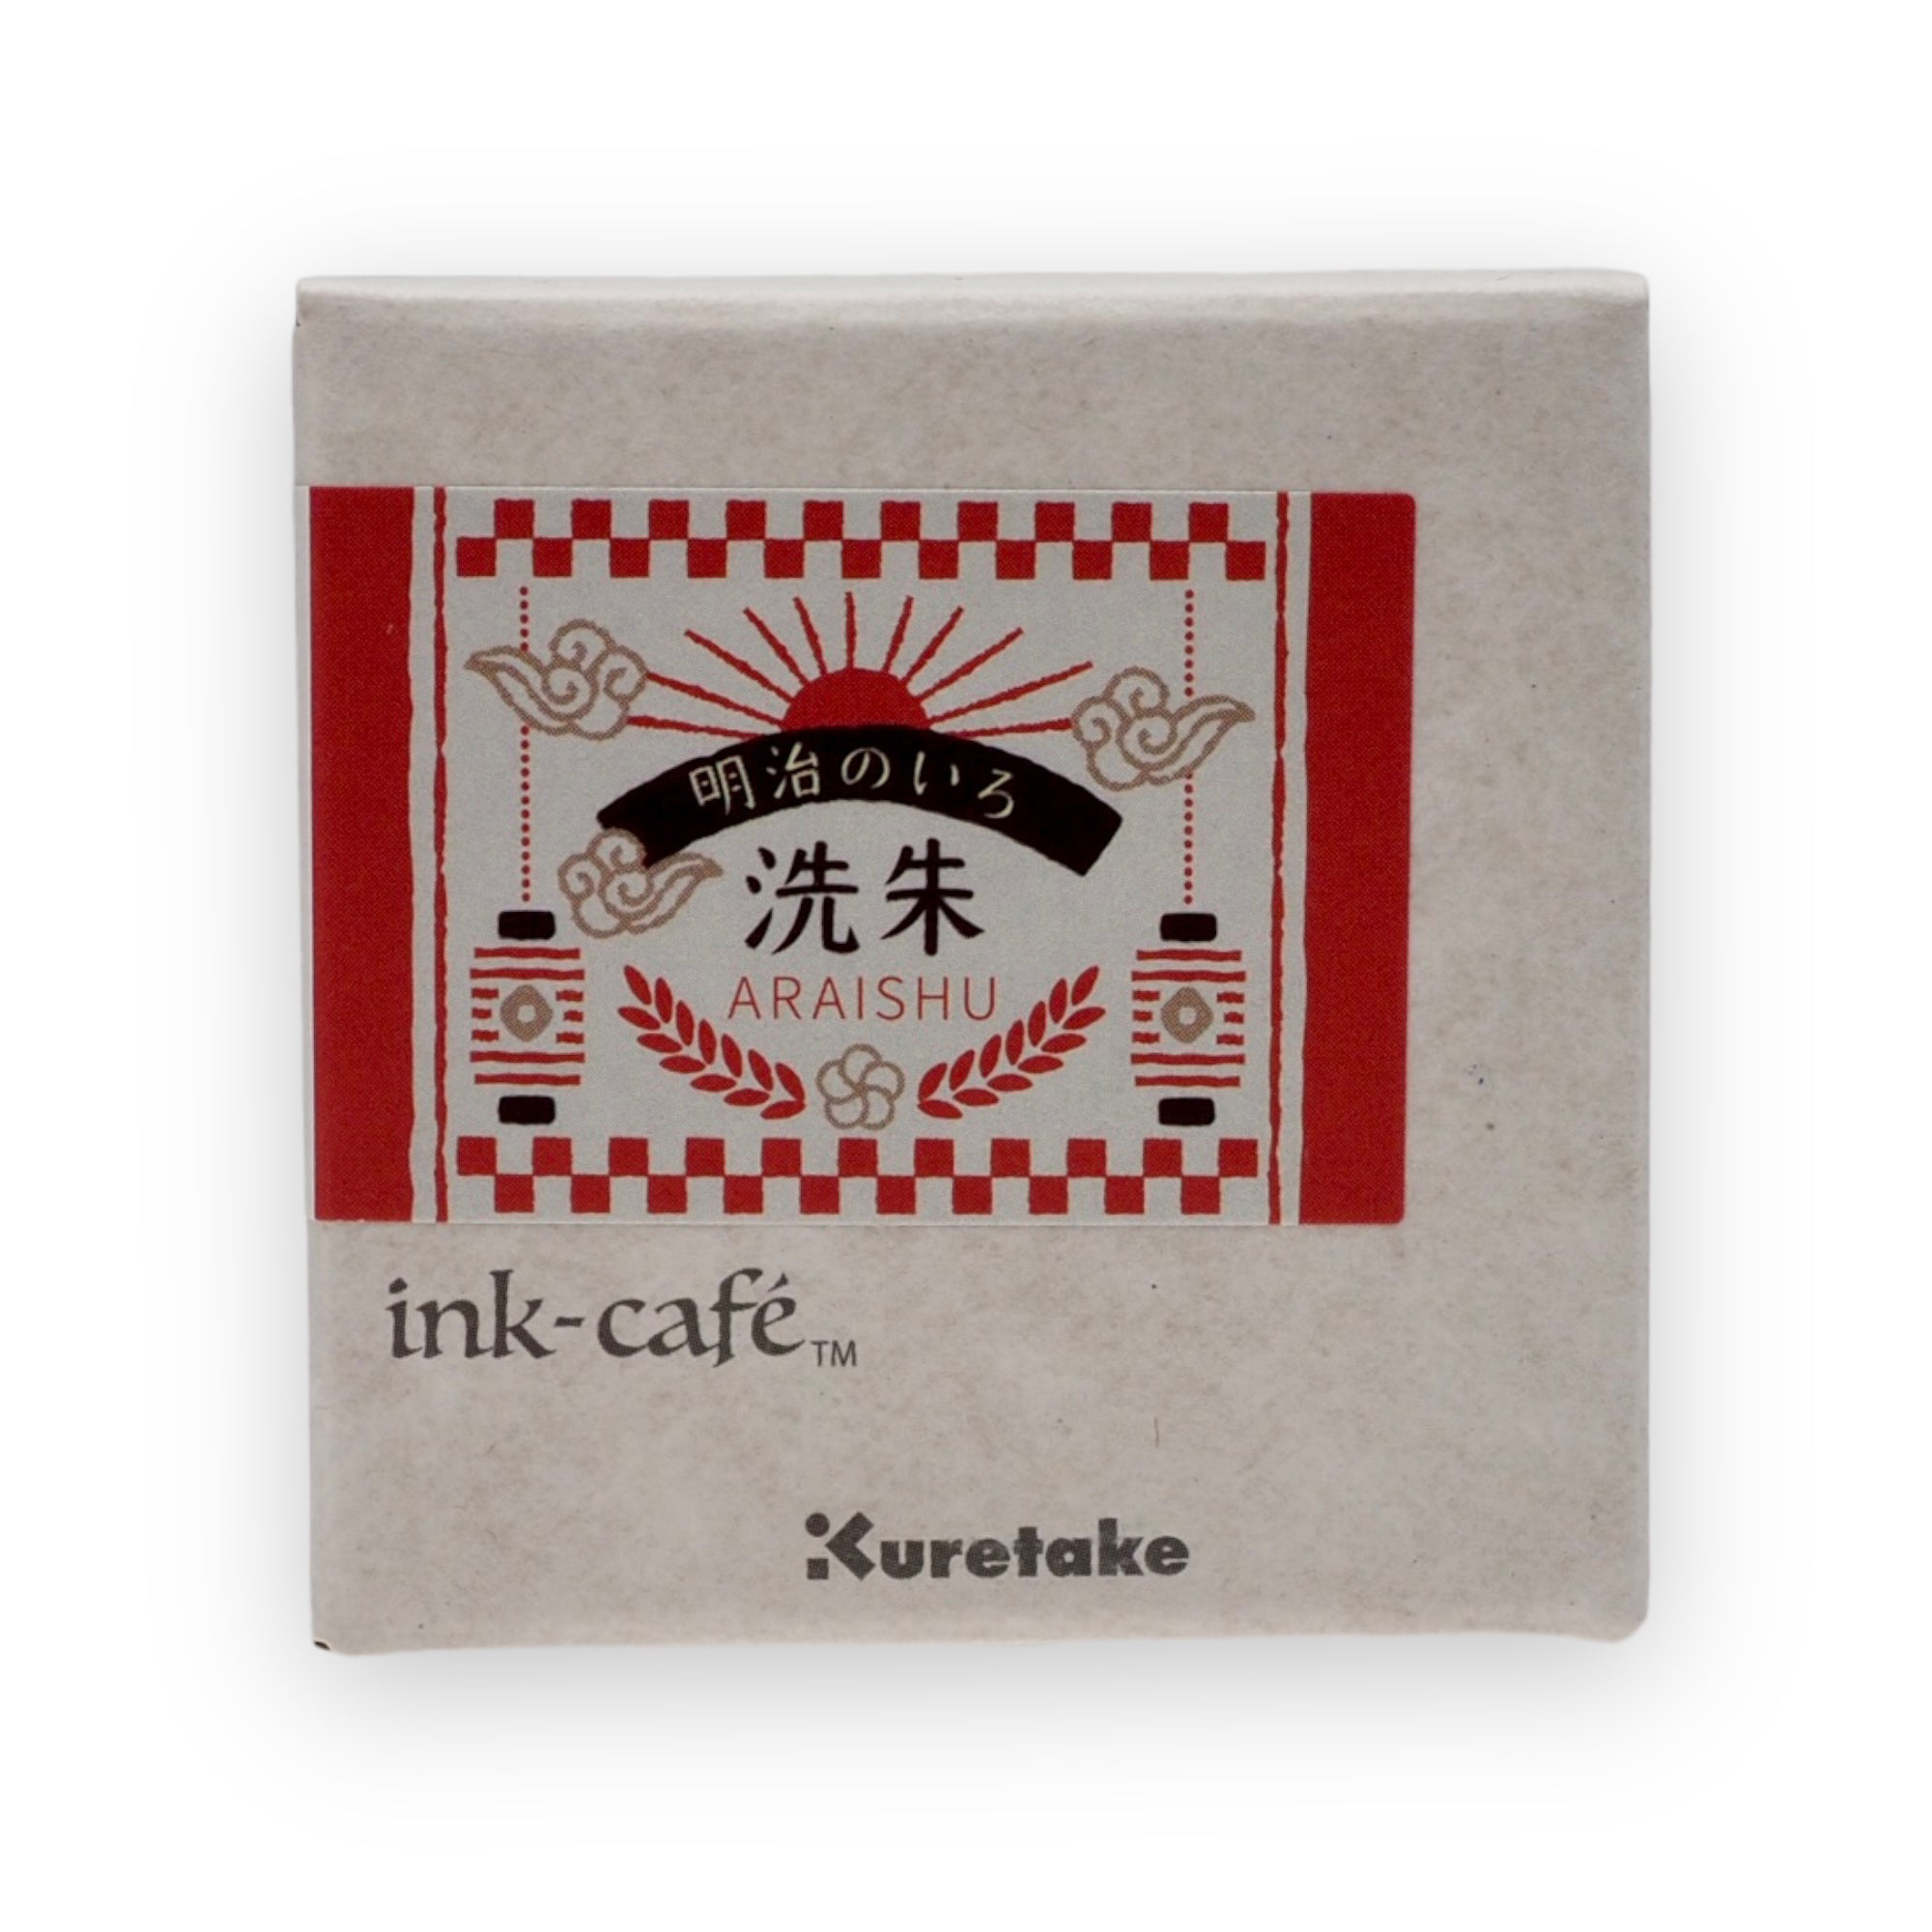 Kuretake - Ink Cafe Araishu